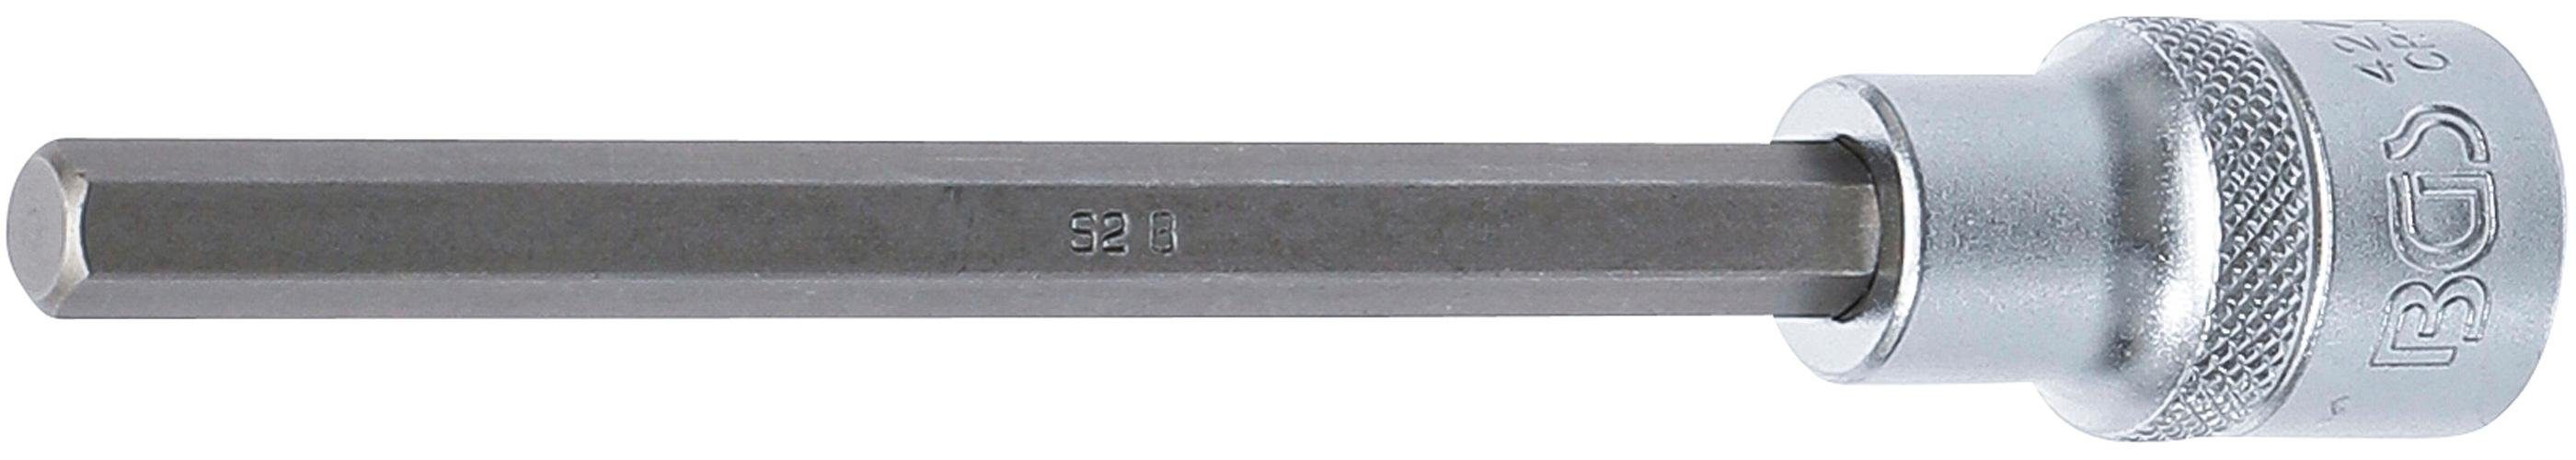 Innenvierkant mm Bit-Einsatz, Länge 8 Sechskant-Bit mm mm, (1/2), Antrieb 140 12,5 Innensechskant technic BGS